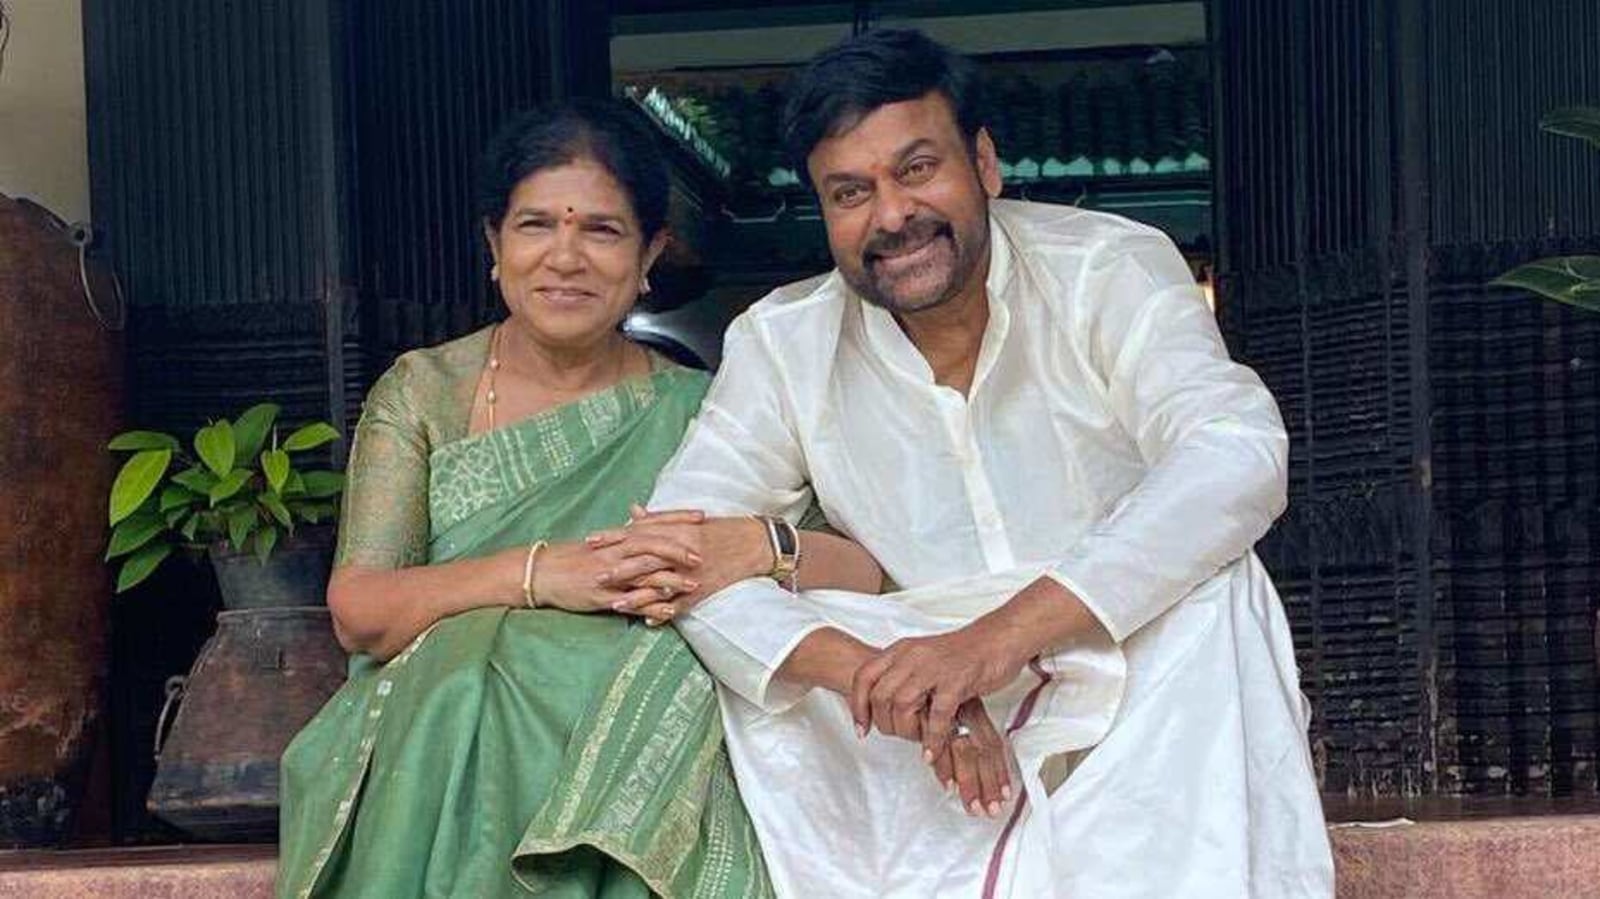 Ram Charan wishes parents Chiranjeevi and Surekha on 42nd wedding anniversary - Hindustan Times